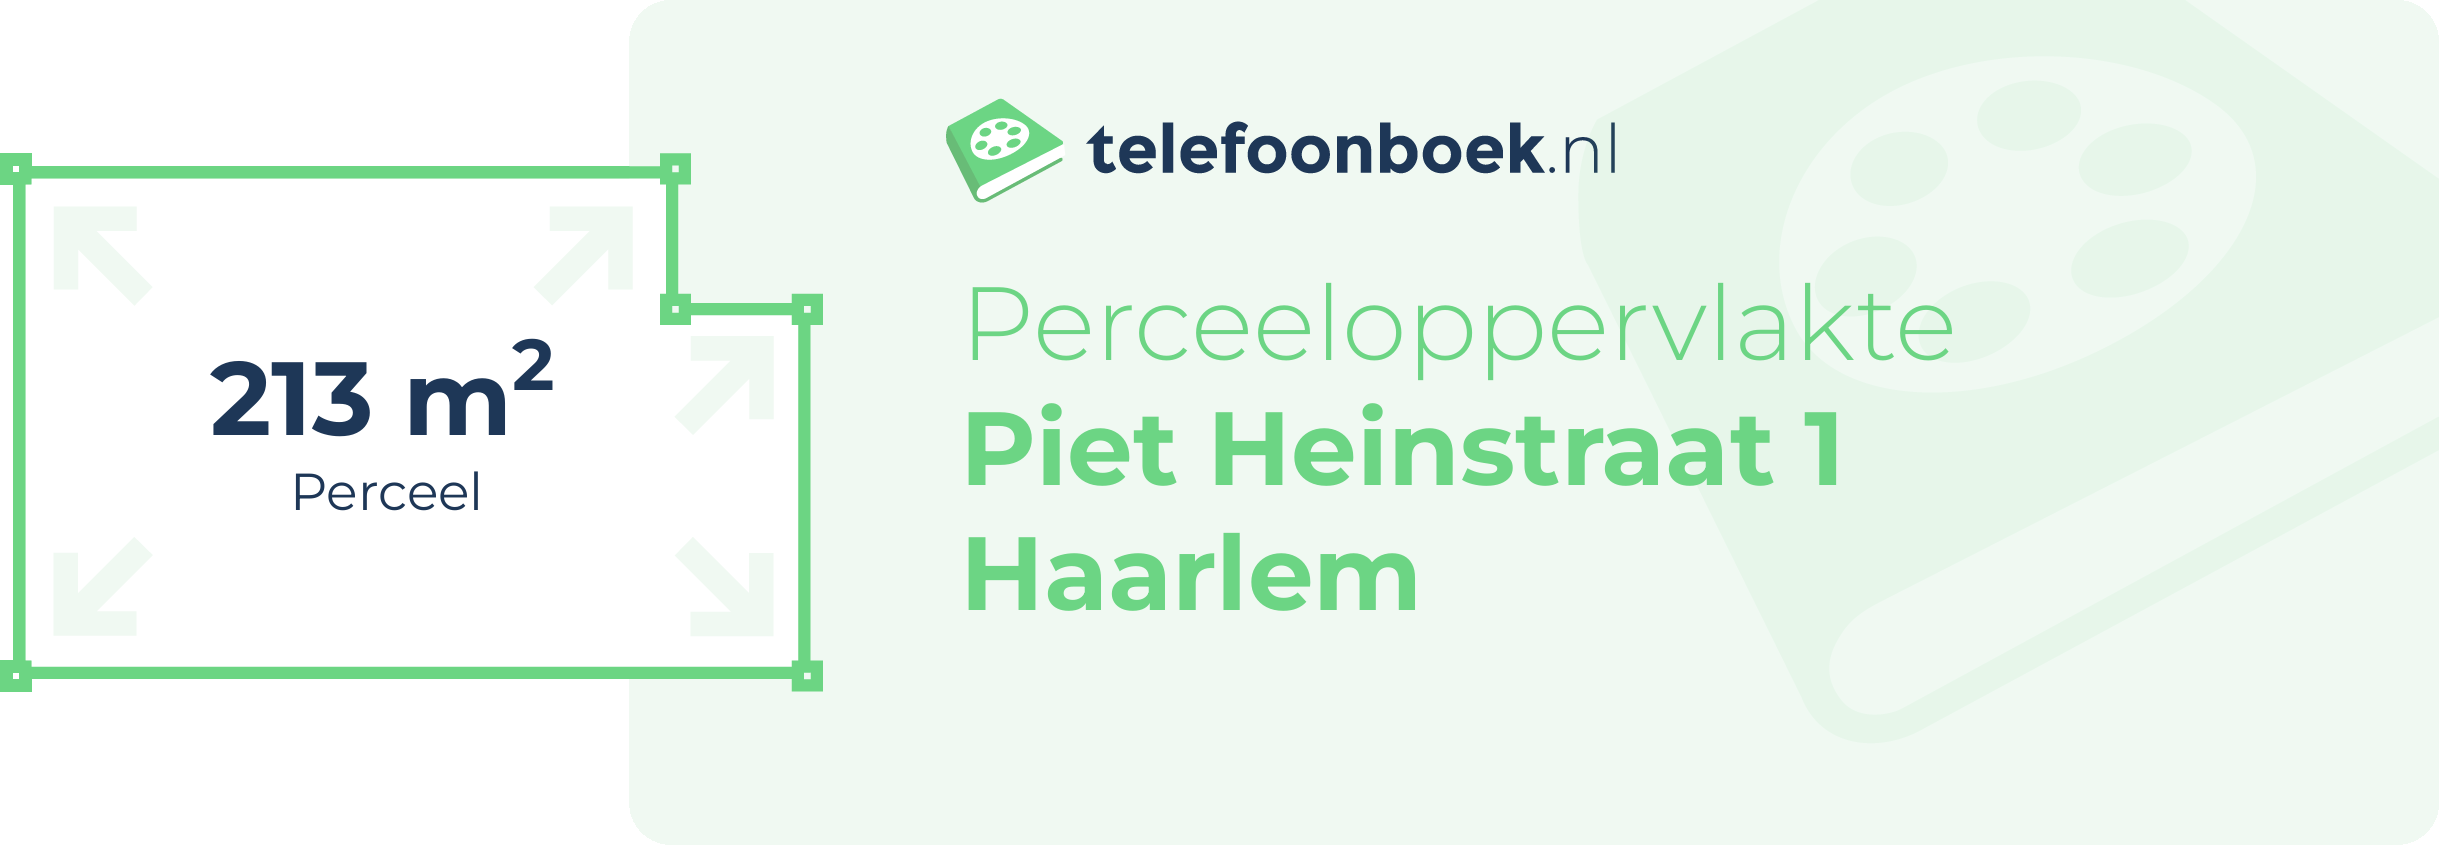 Perceeloppervlakte Piet Heinstraat 1 Haarlem